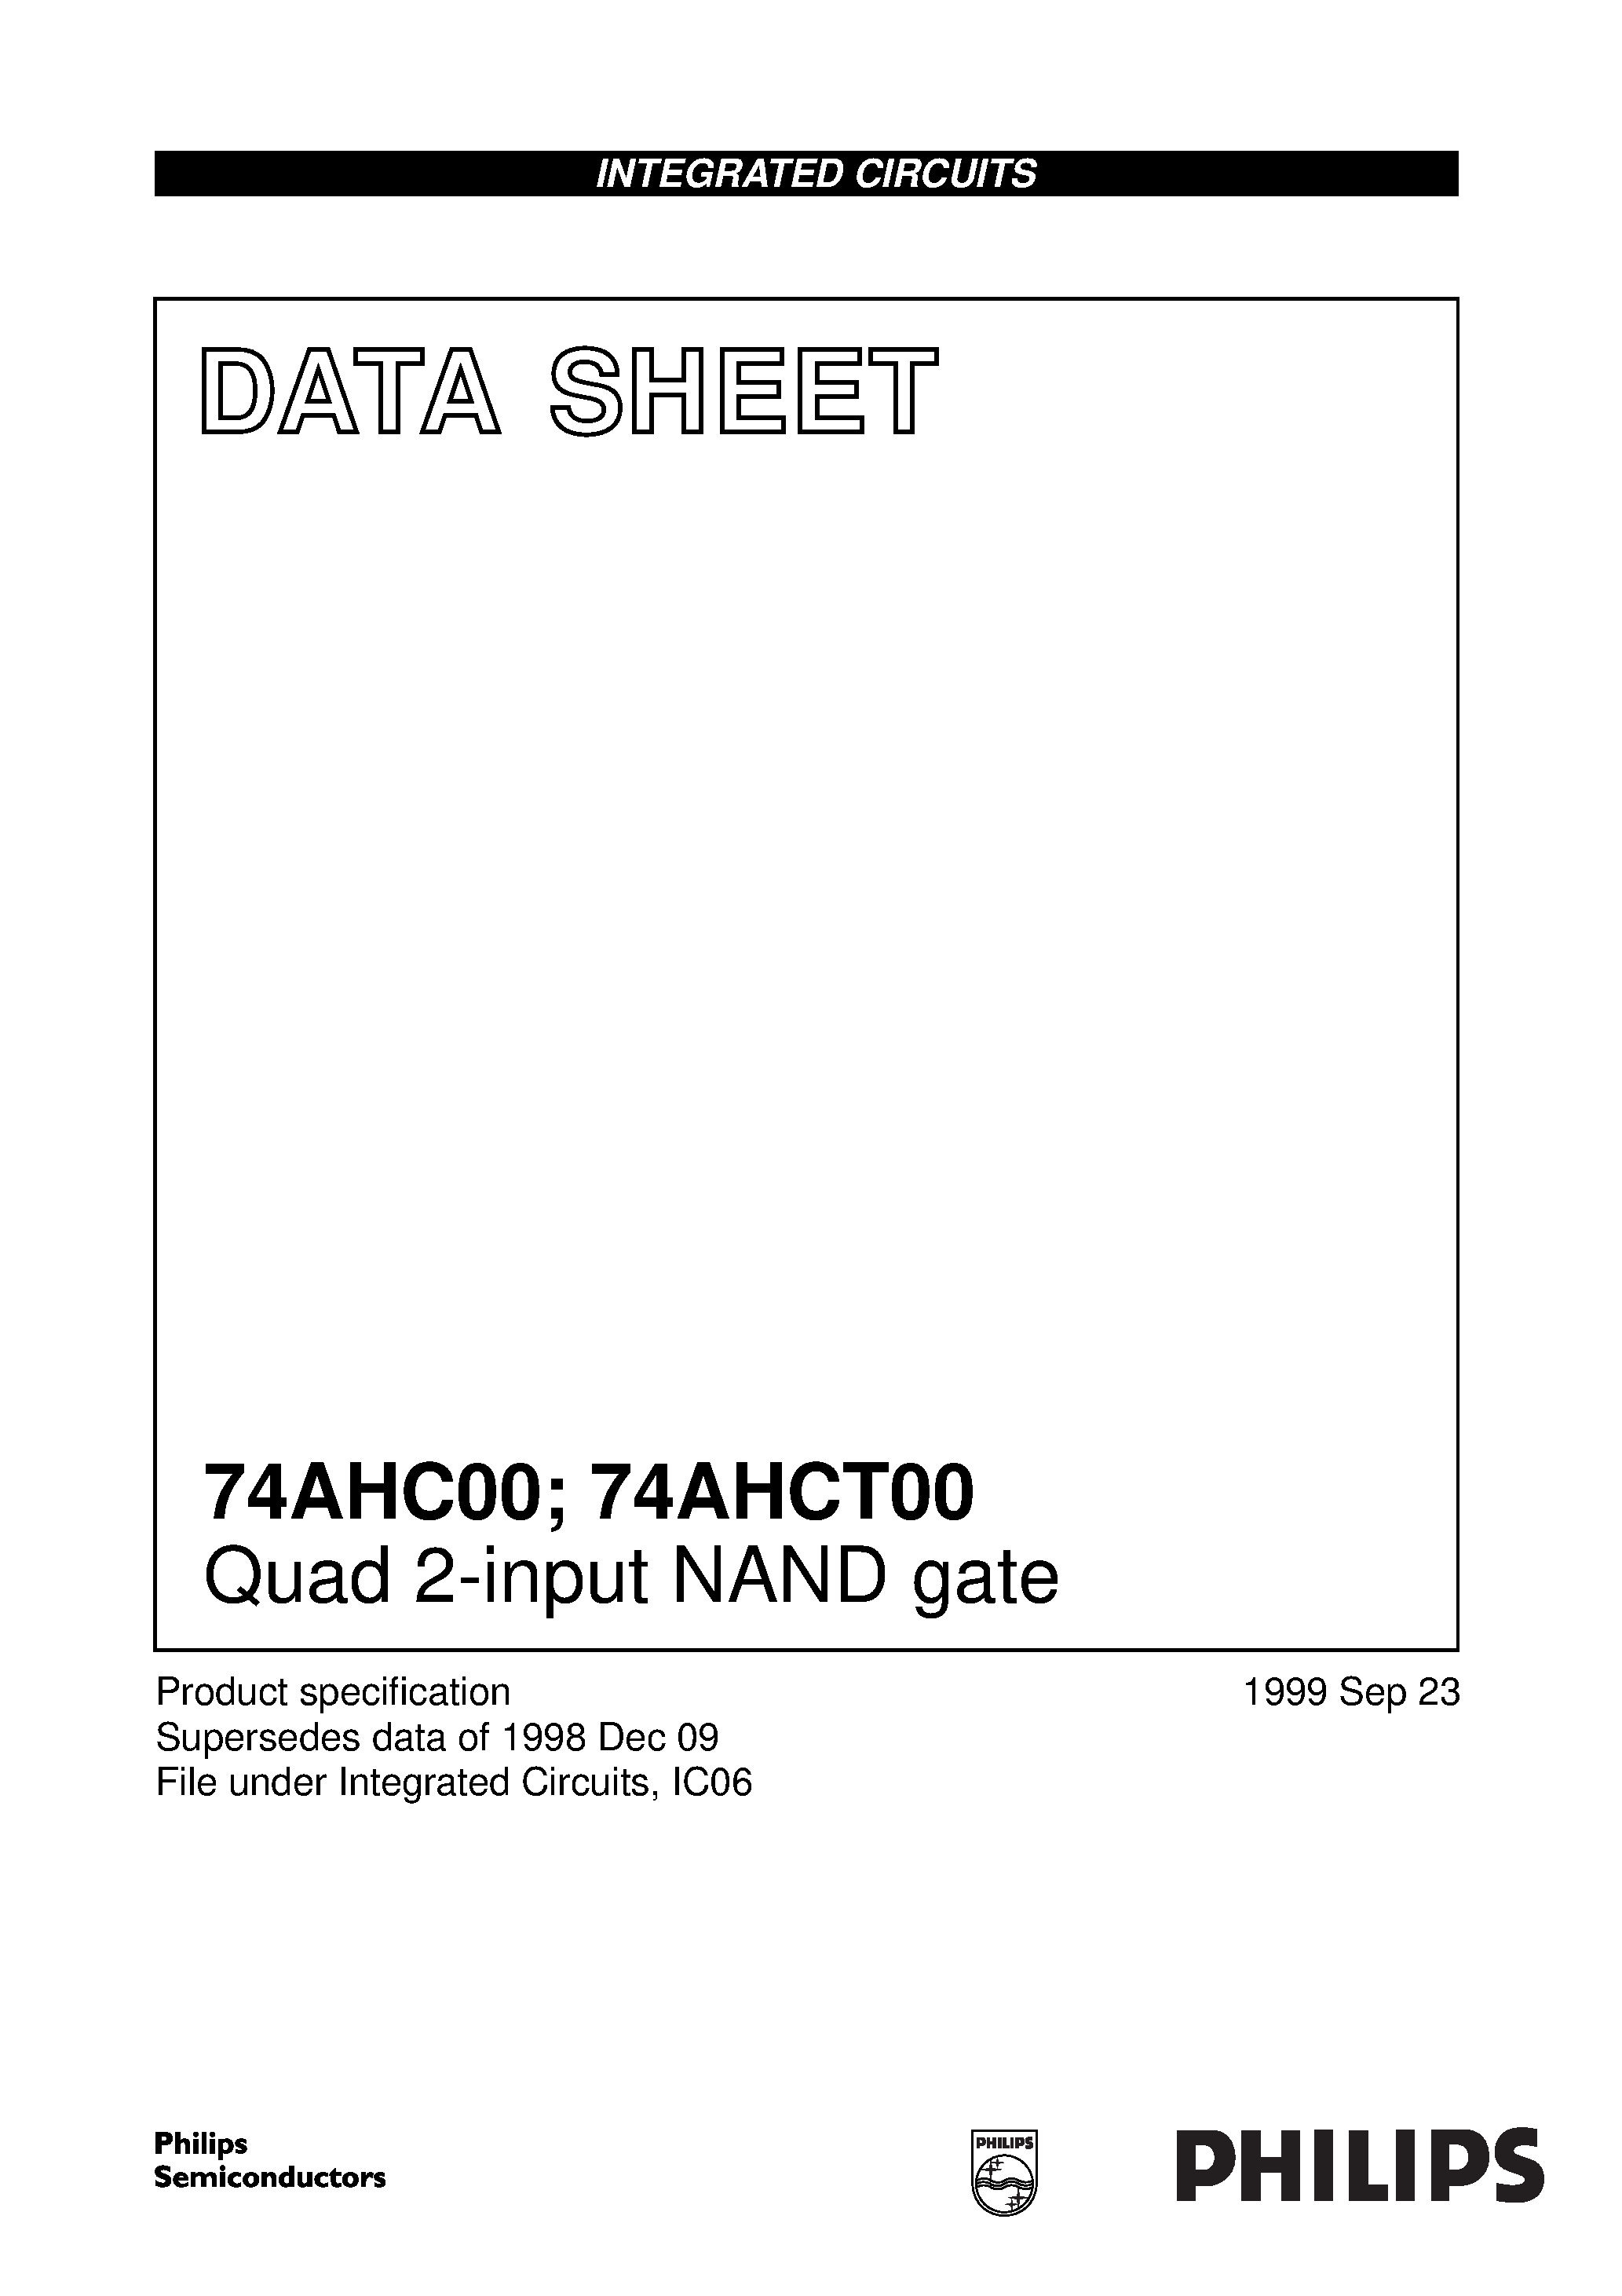 Datasheet 74AHC00PW - Quad 2-input NAND gate page 1